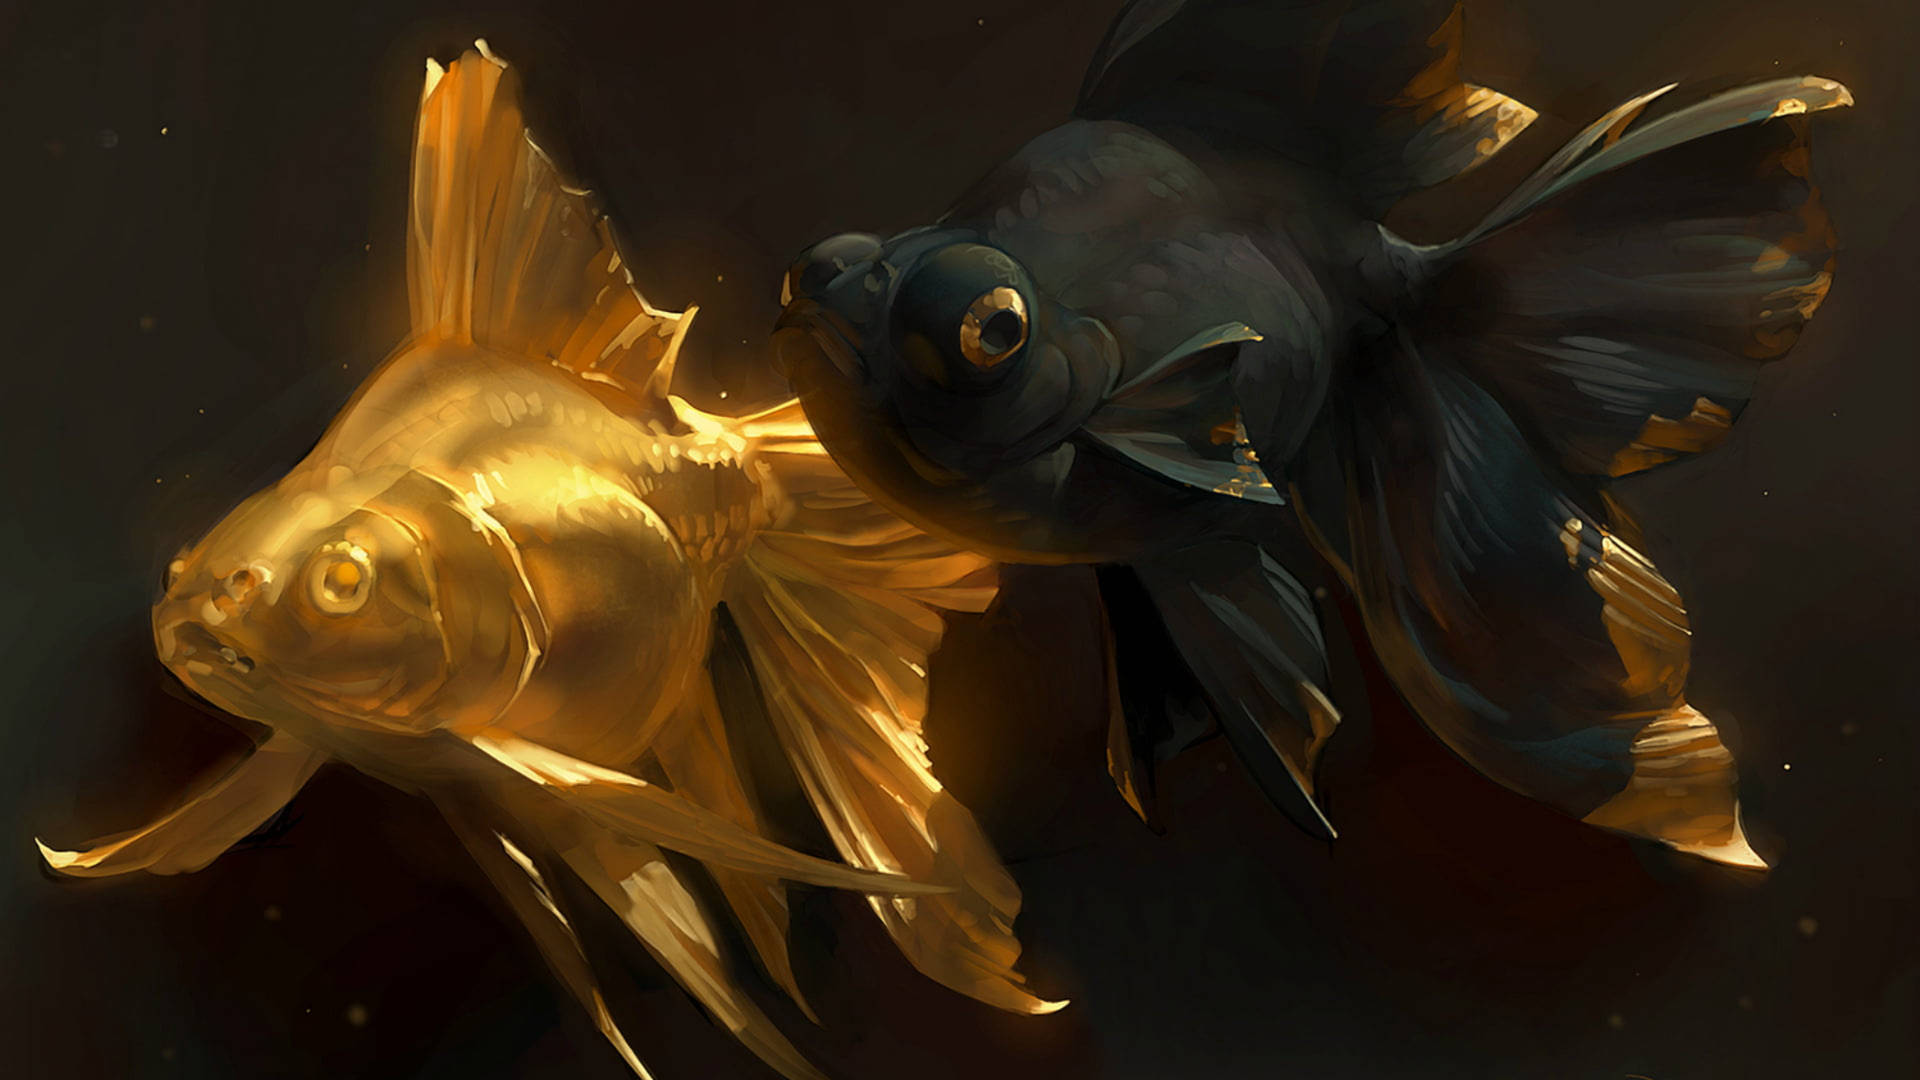 Black And Gold Fish Artwork Wallpaper